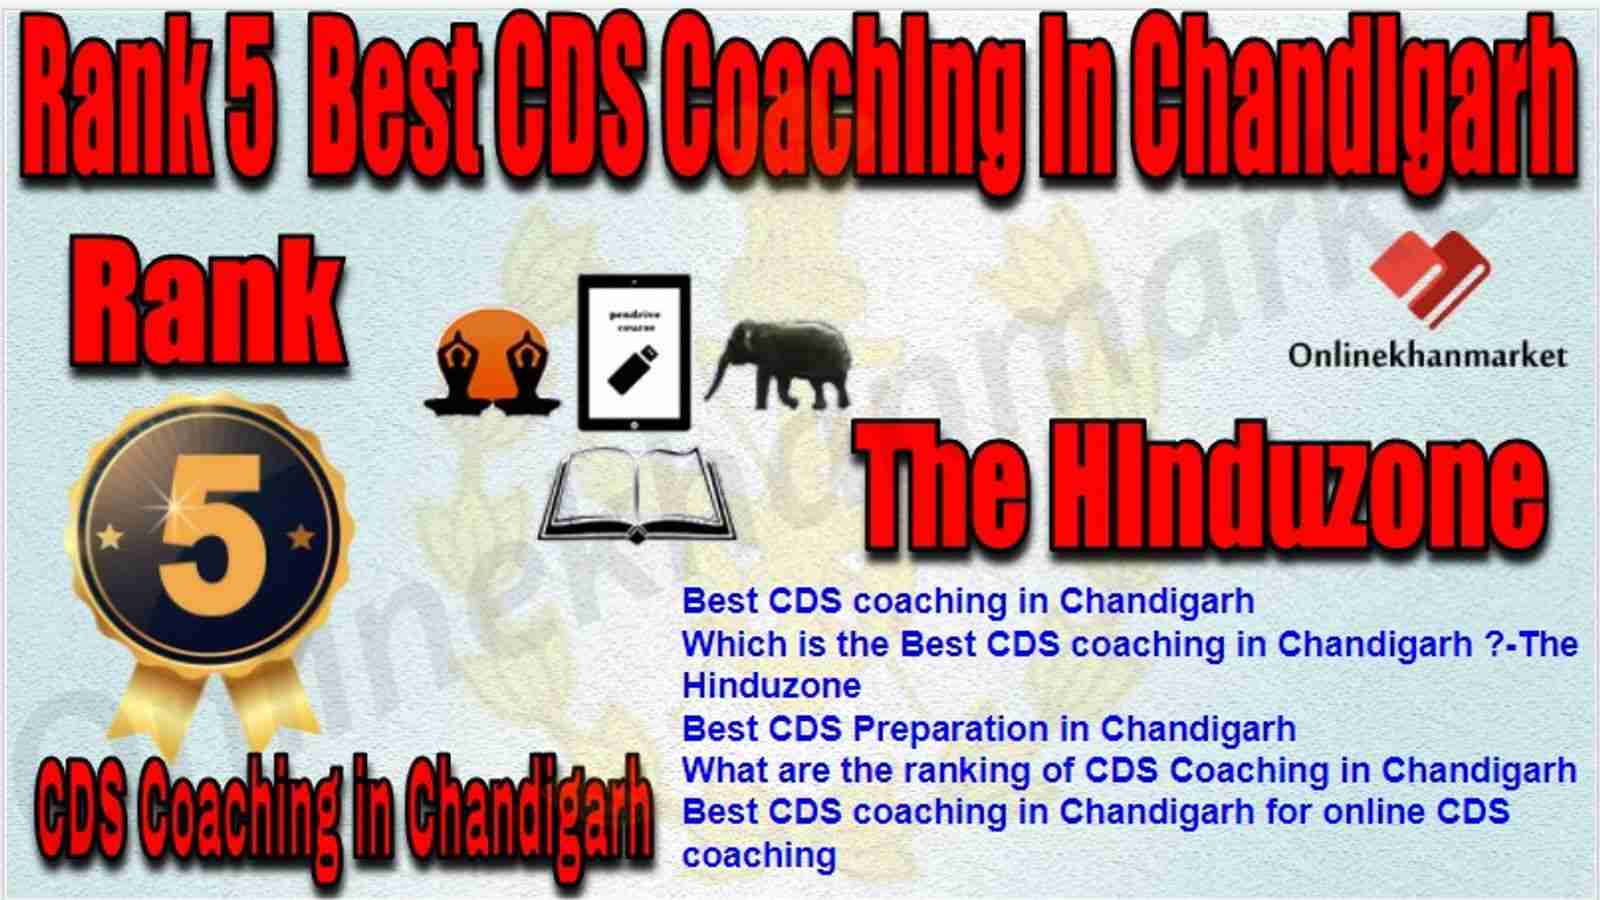 Rank 5 Best CDS Coaching in chandigarh